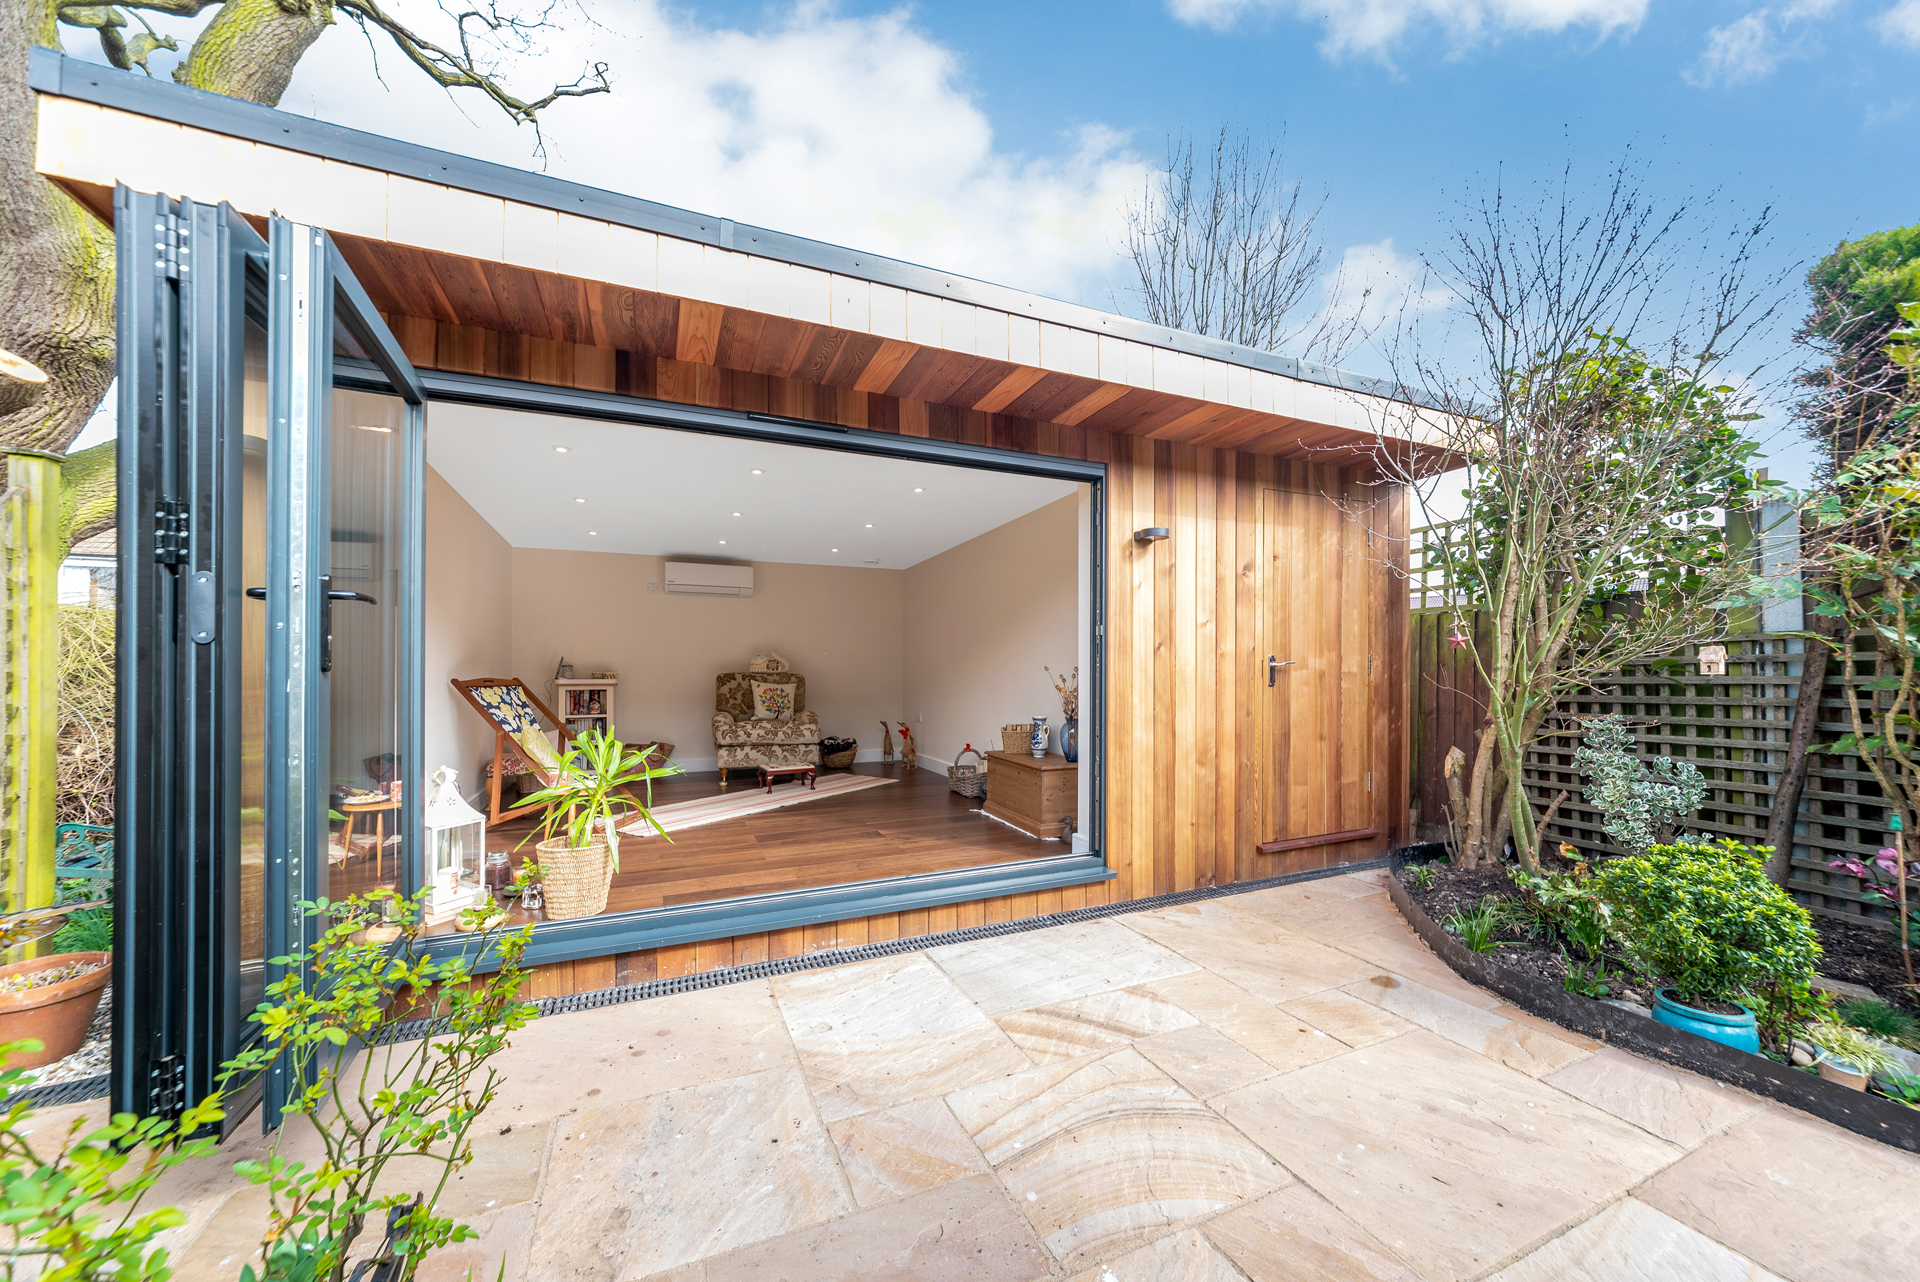 Contemporary garden rooms in Essex